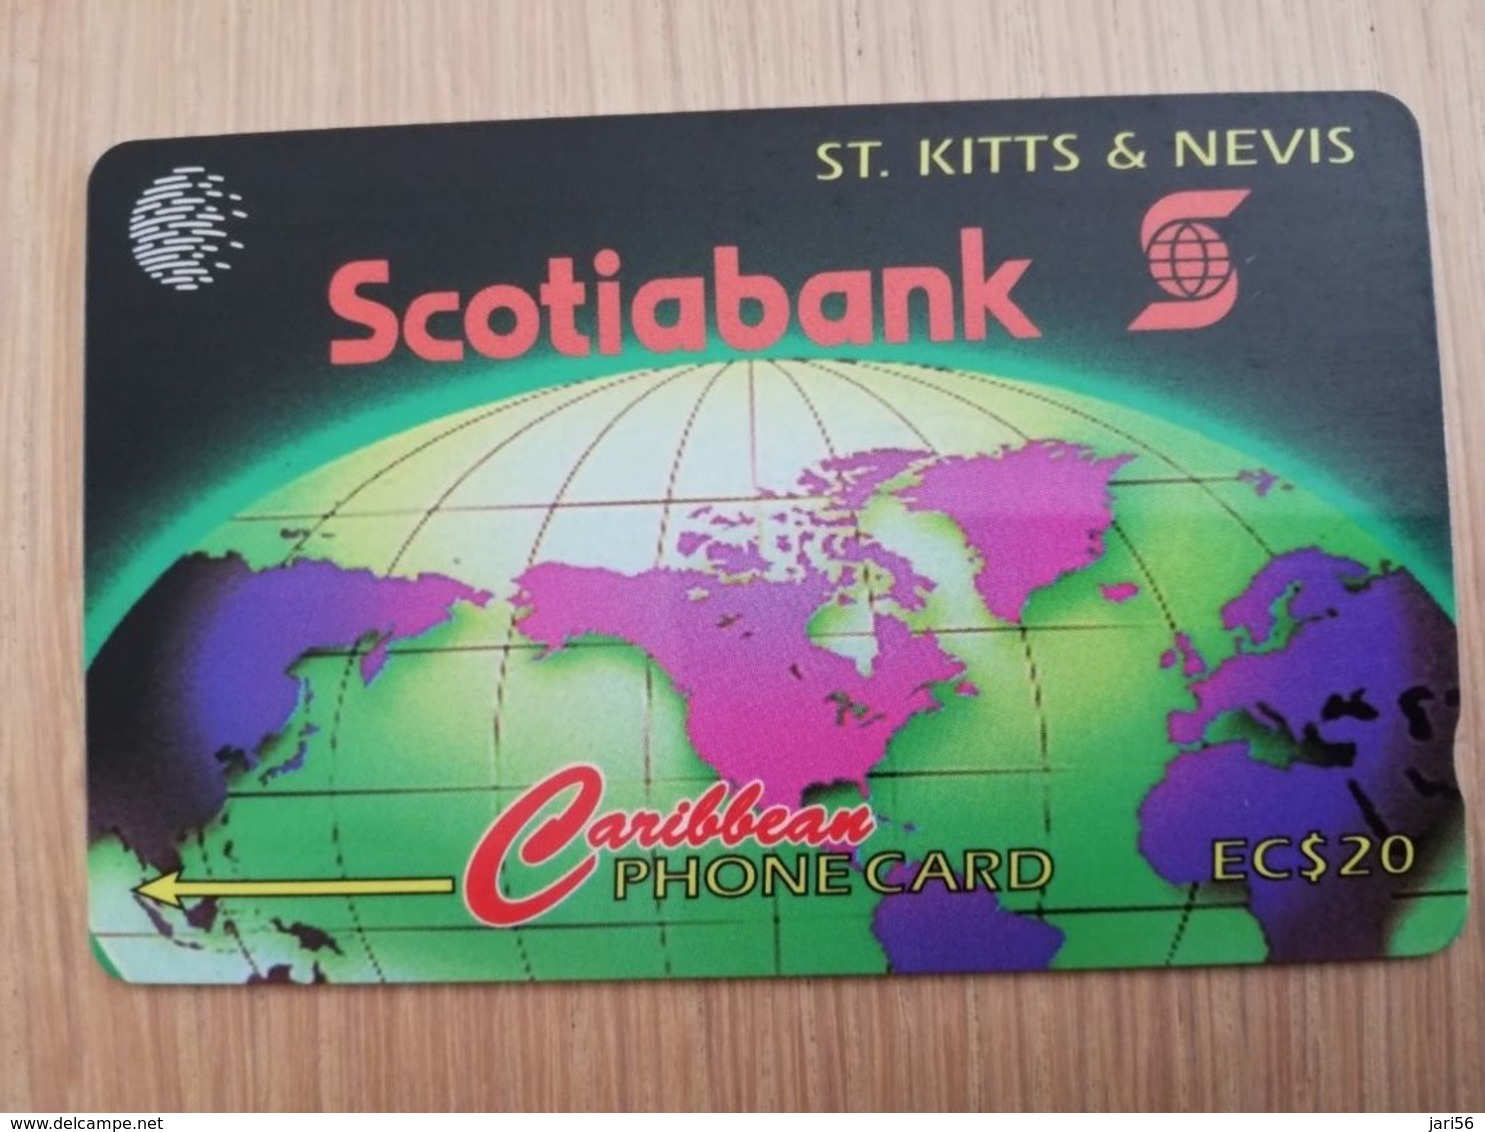 ST KITTS & NEVIS   GPT CARD $20,-   13CSKA     NO STK-13A  SCOTIABANK       Fine Used Card  **2351** - St. Kitts & Nevis